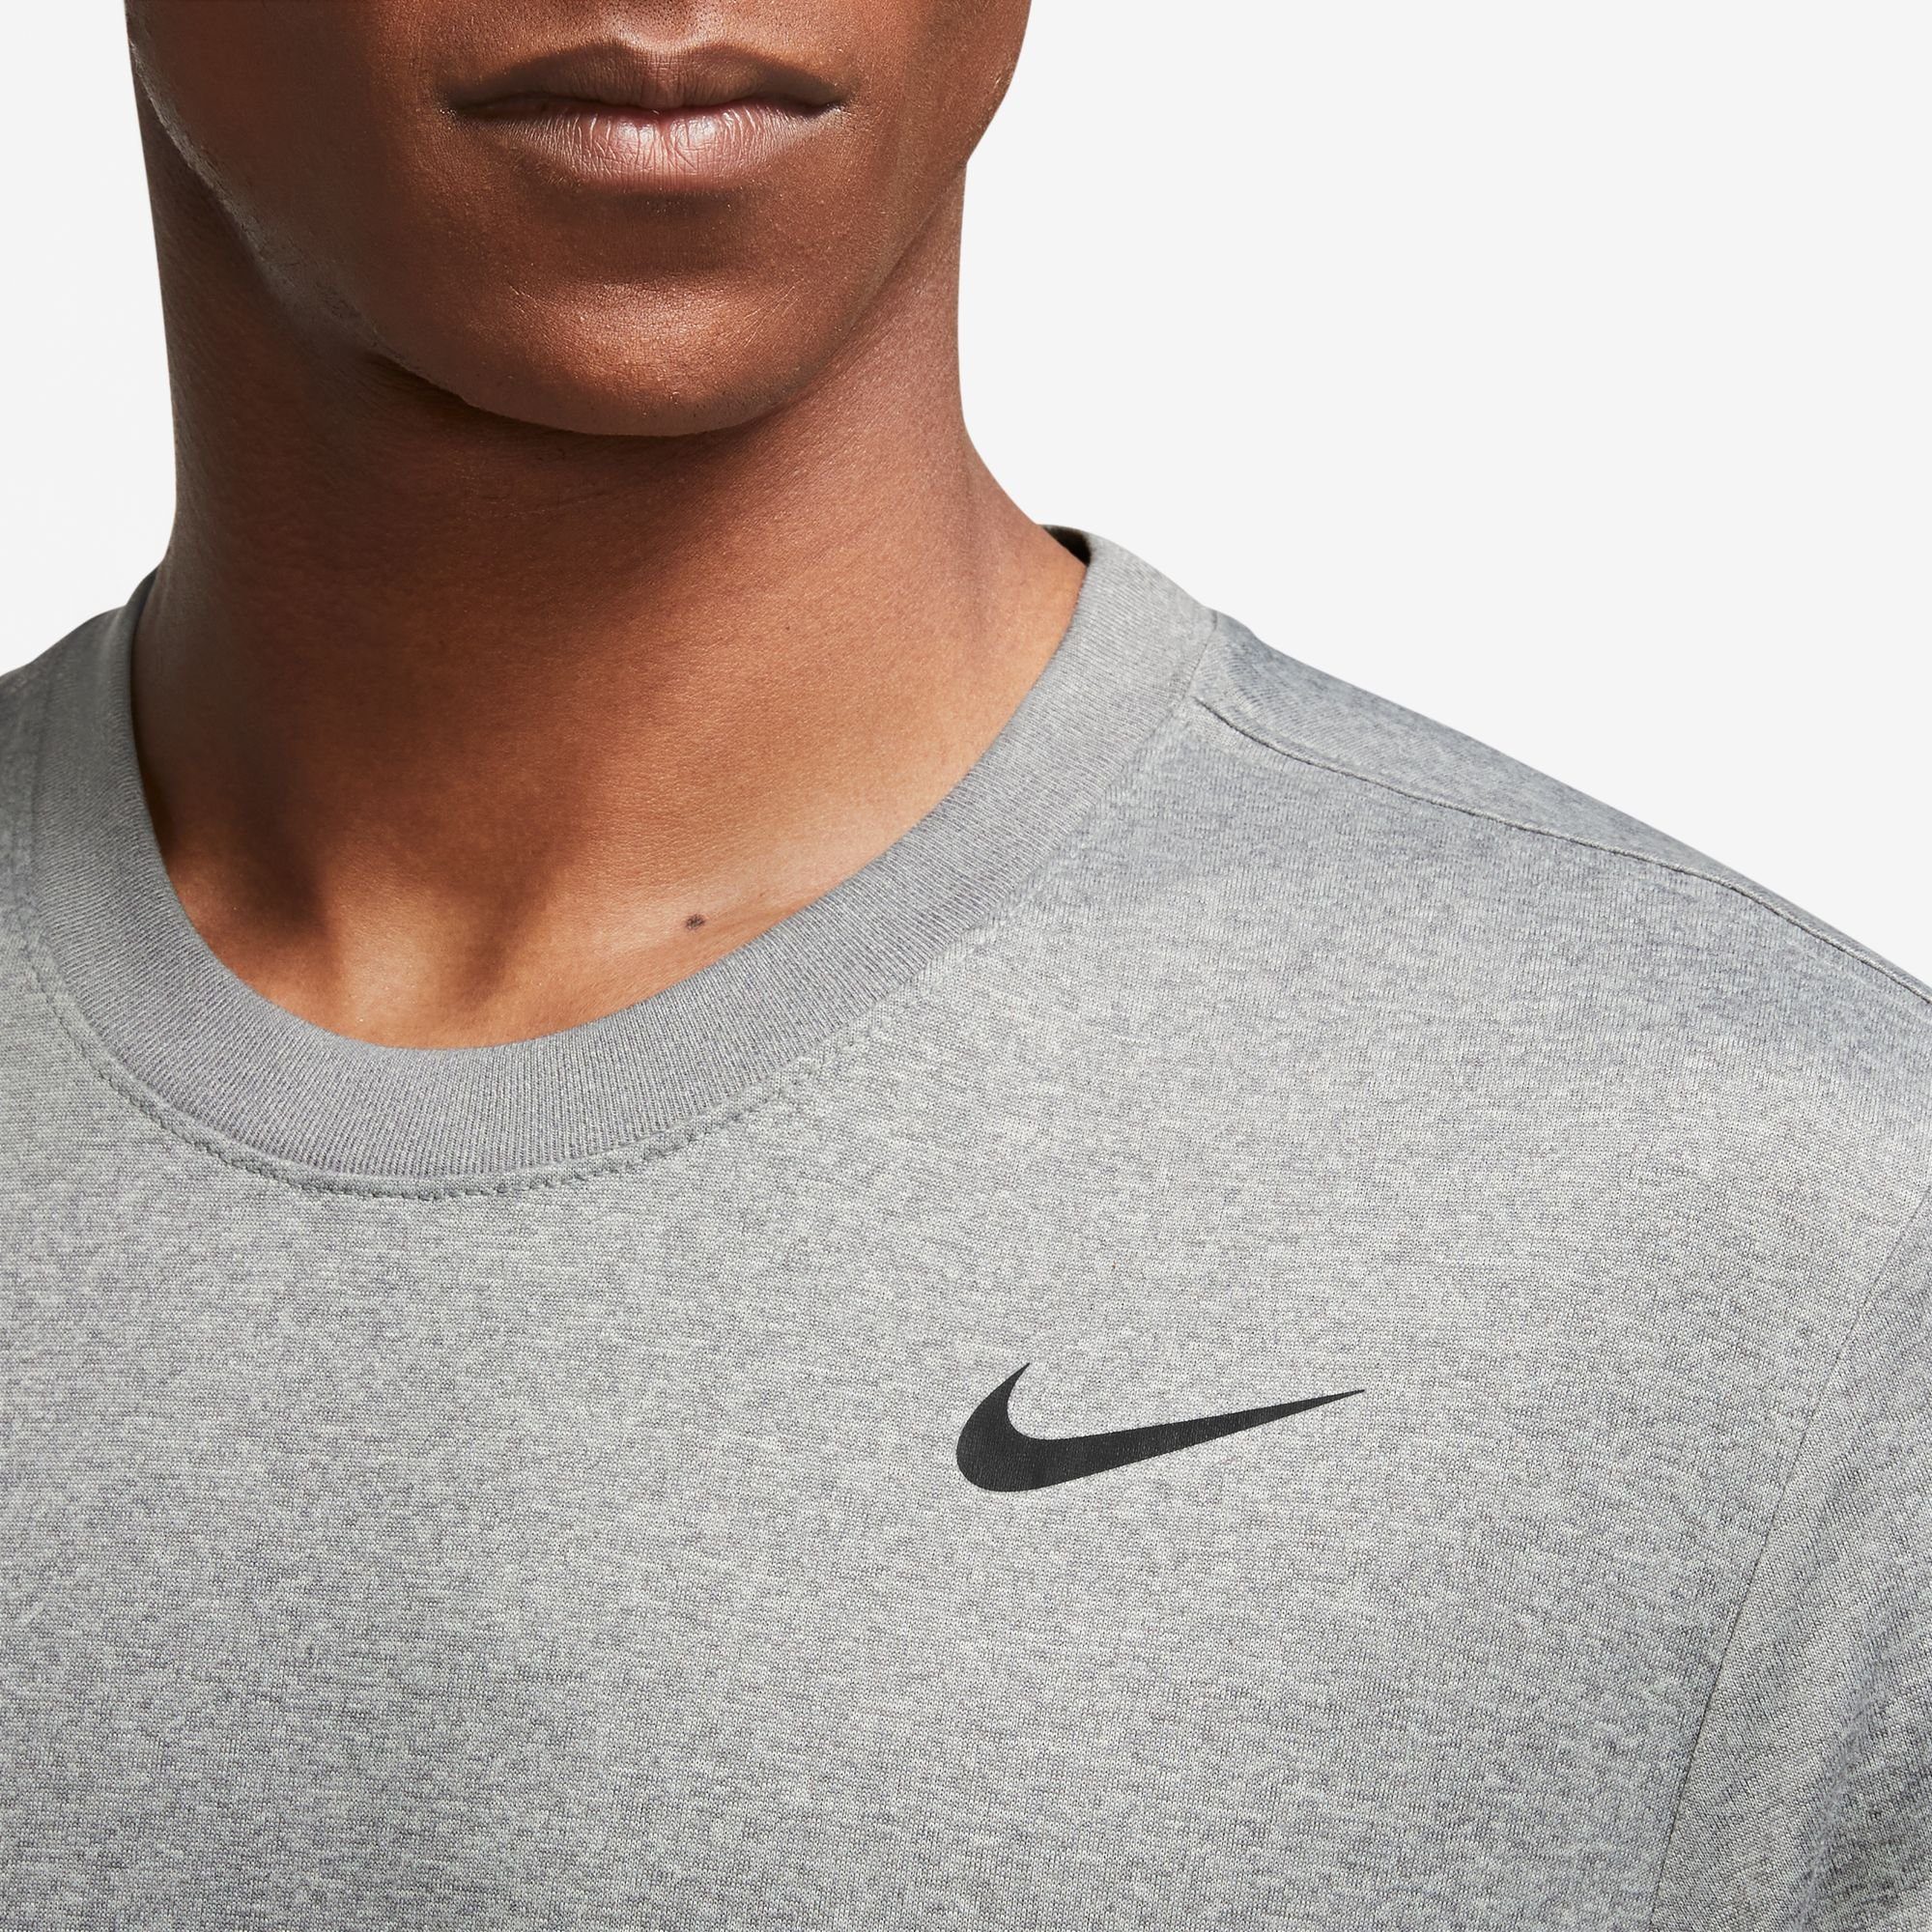 SILVER/HTR/BLACK DRI-FIT FITNESS Nike T-SHIRT LEGEND GREY/FLT Trainingsshirt MEN'S TUMBLED